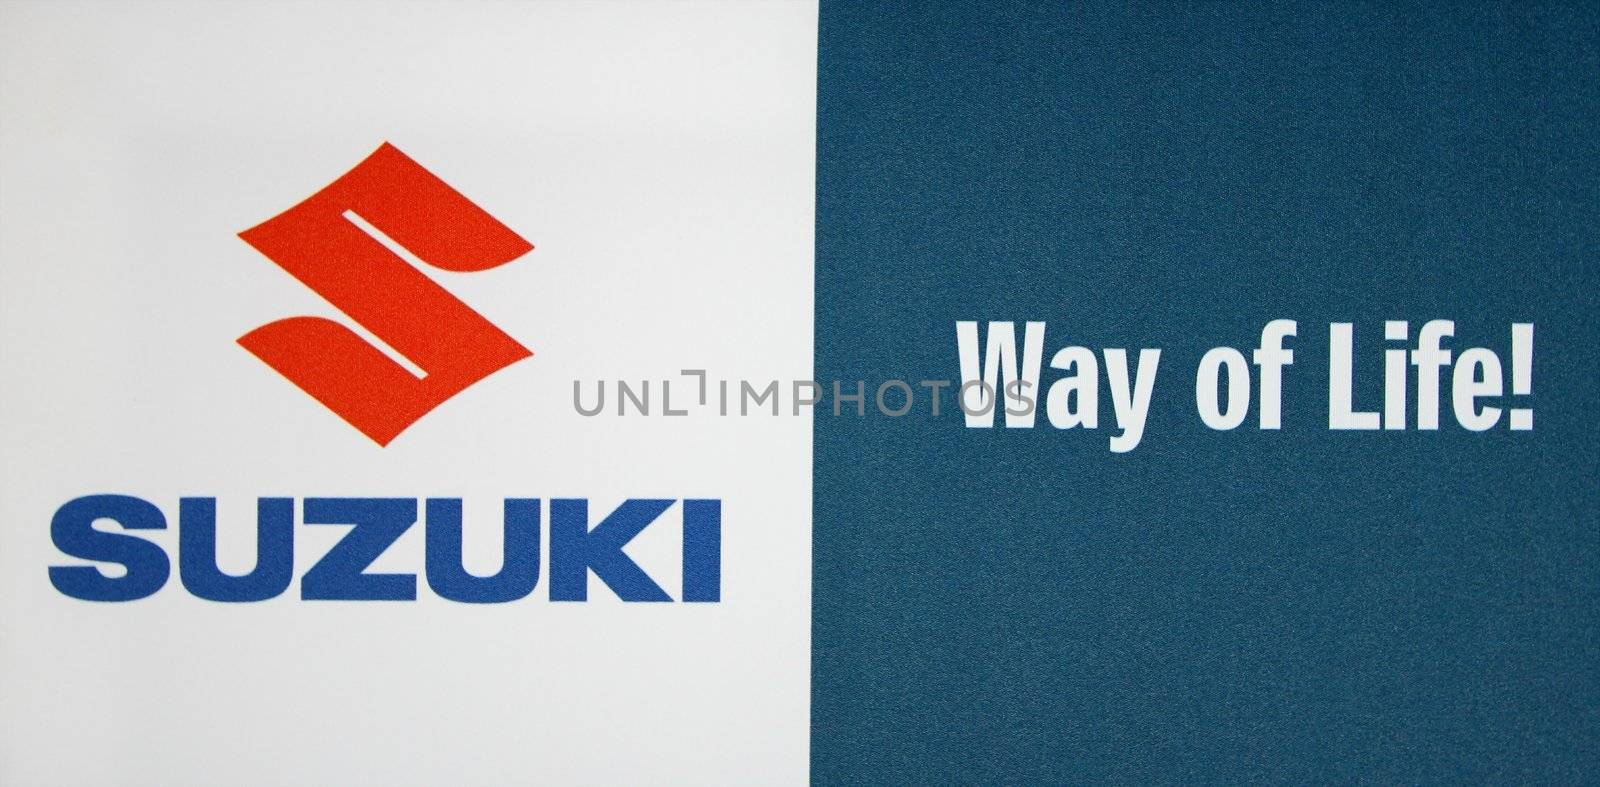 Suzuki logo by Elenaphotos21